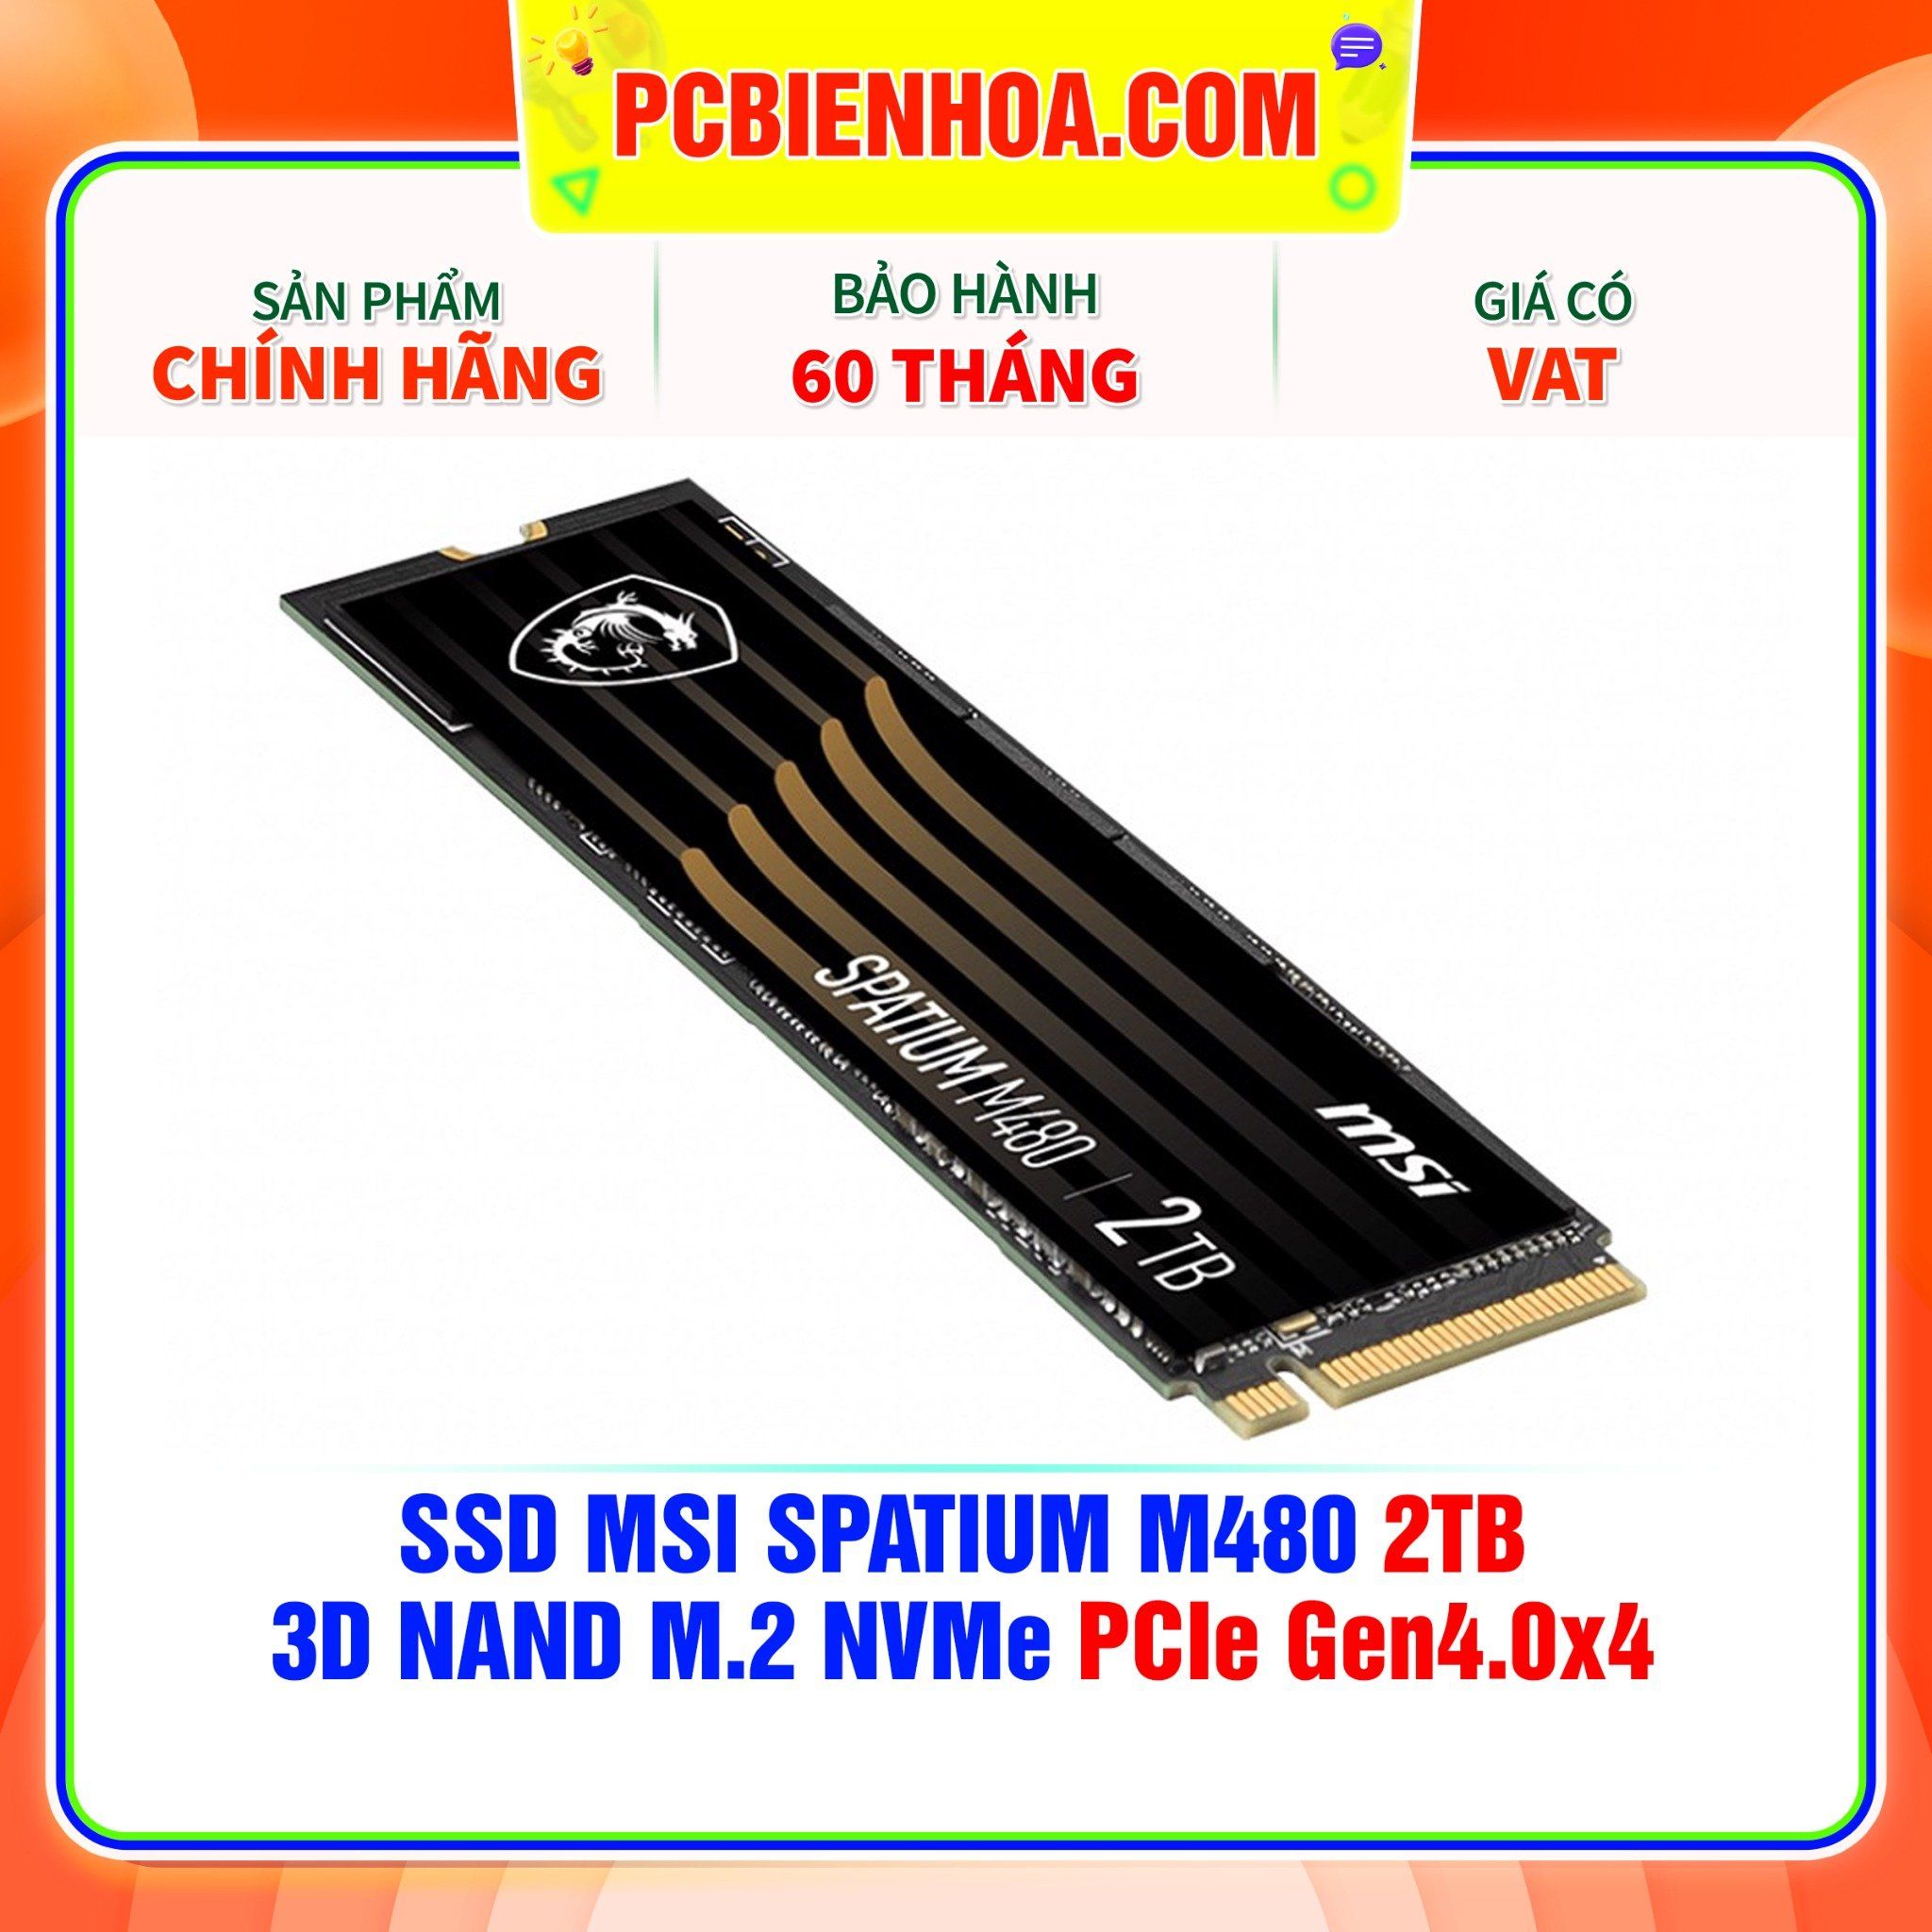  SSD MSI SPATIUM M480 2TB - 3D NAND M.2 NVMe PCIe Gen4.0x4 